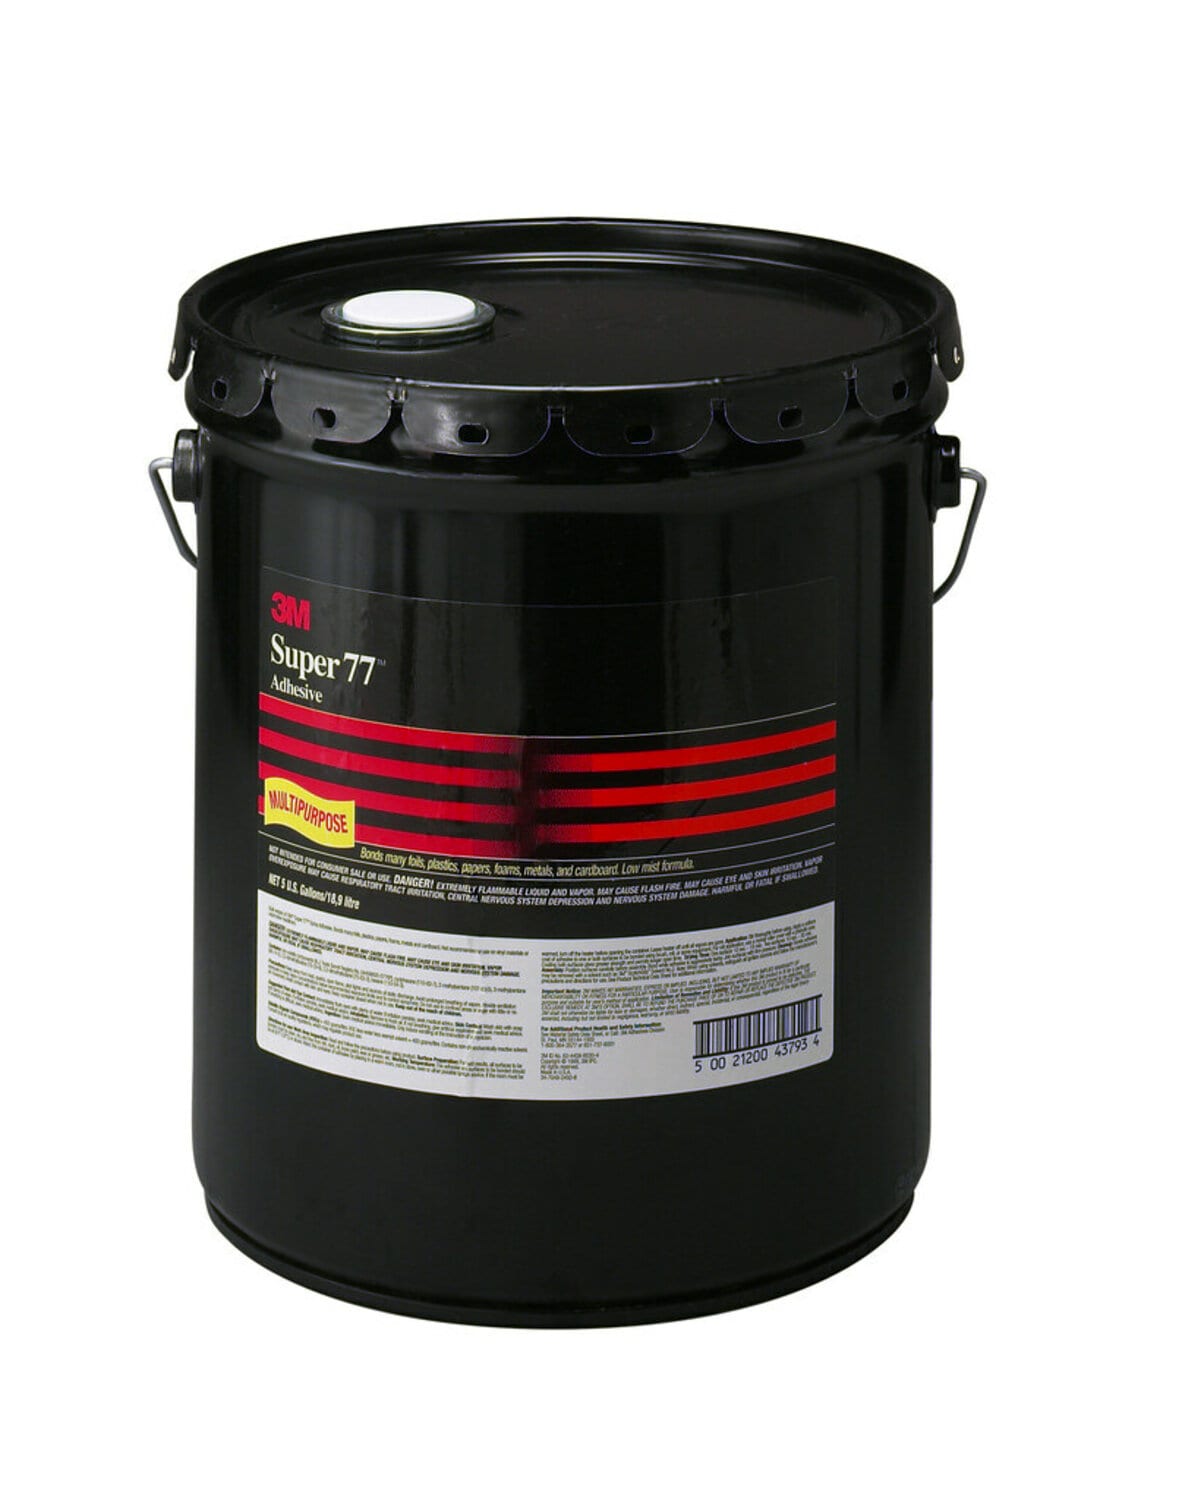 7010310261 - 3M Super 77 Classic Spray Adhesive, Clear, 55 Gallon Drum (52 Gallon Net)